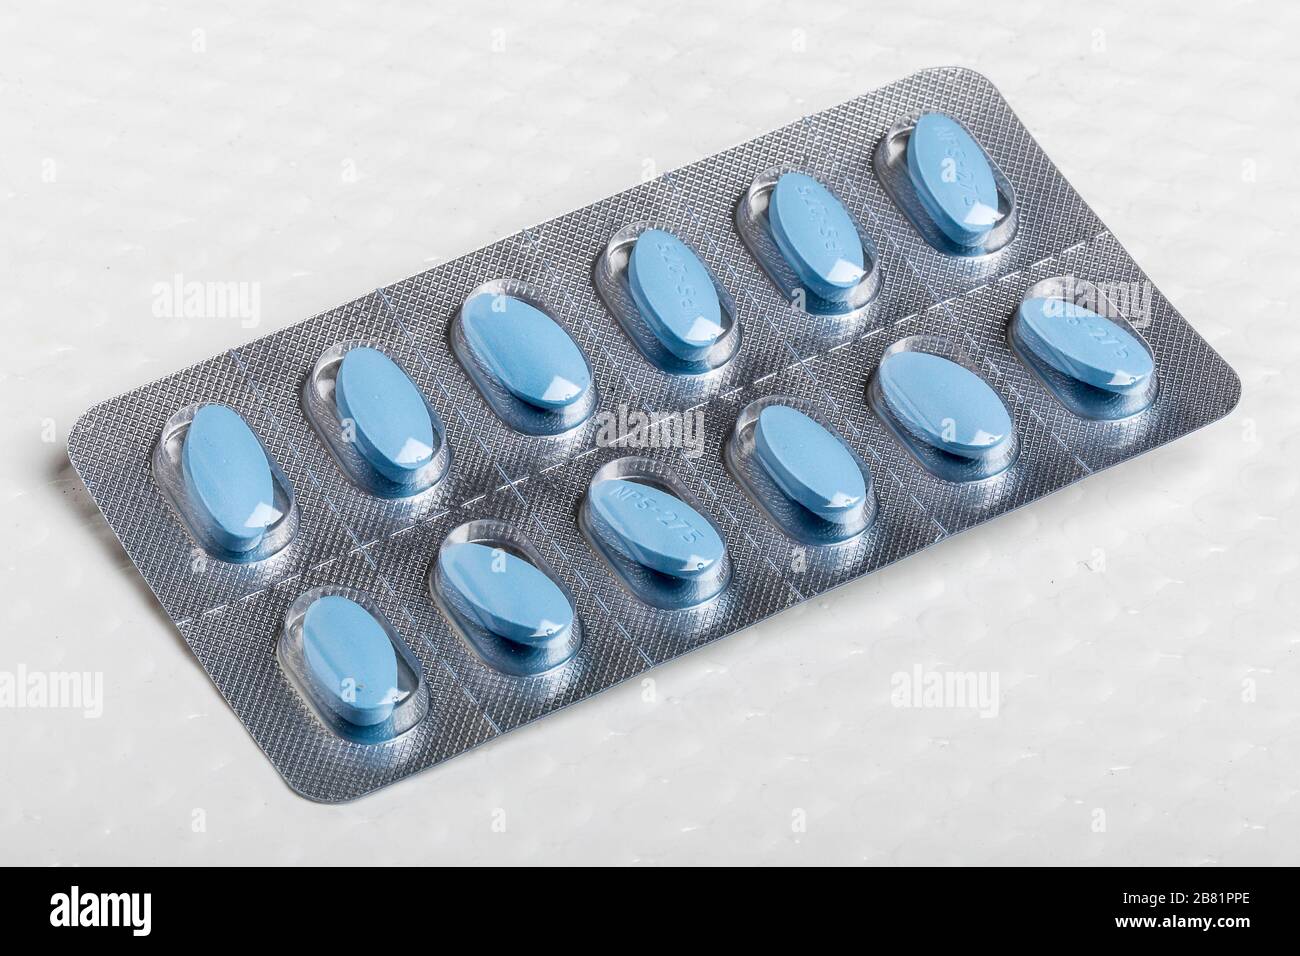 TILBURG - 17-03-2020, Packshot di Painkiller, antidolorifico. Tablet Aleve.  Medicina Foto stock - Alamy